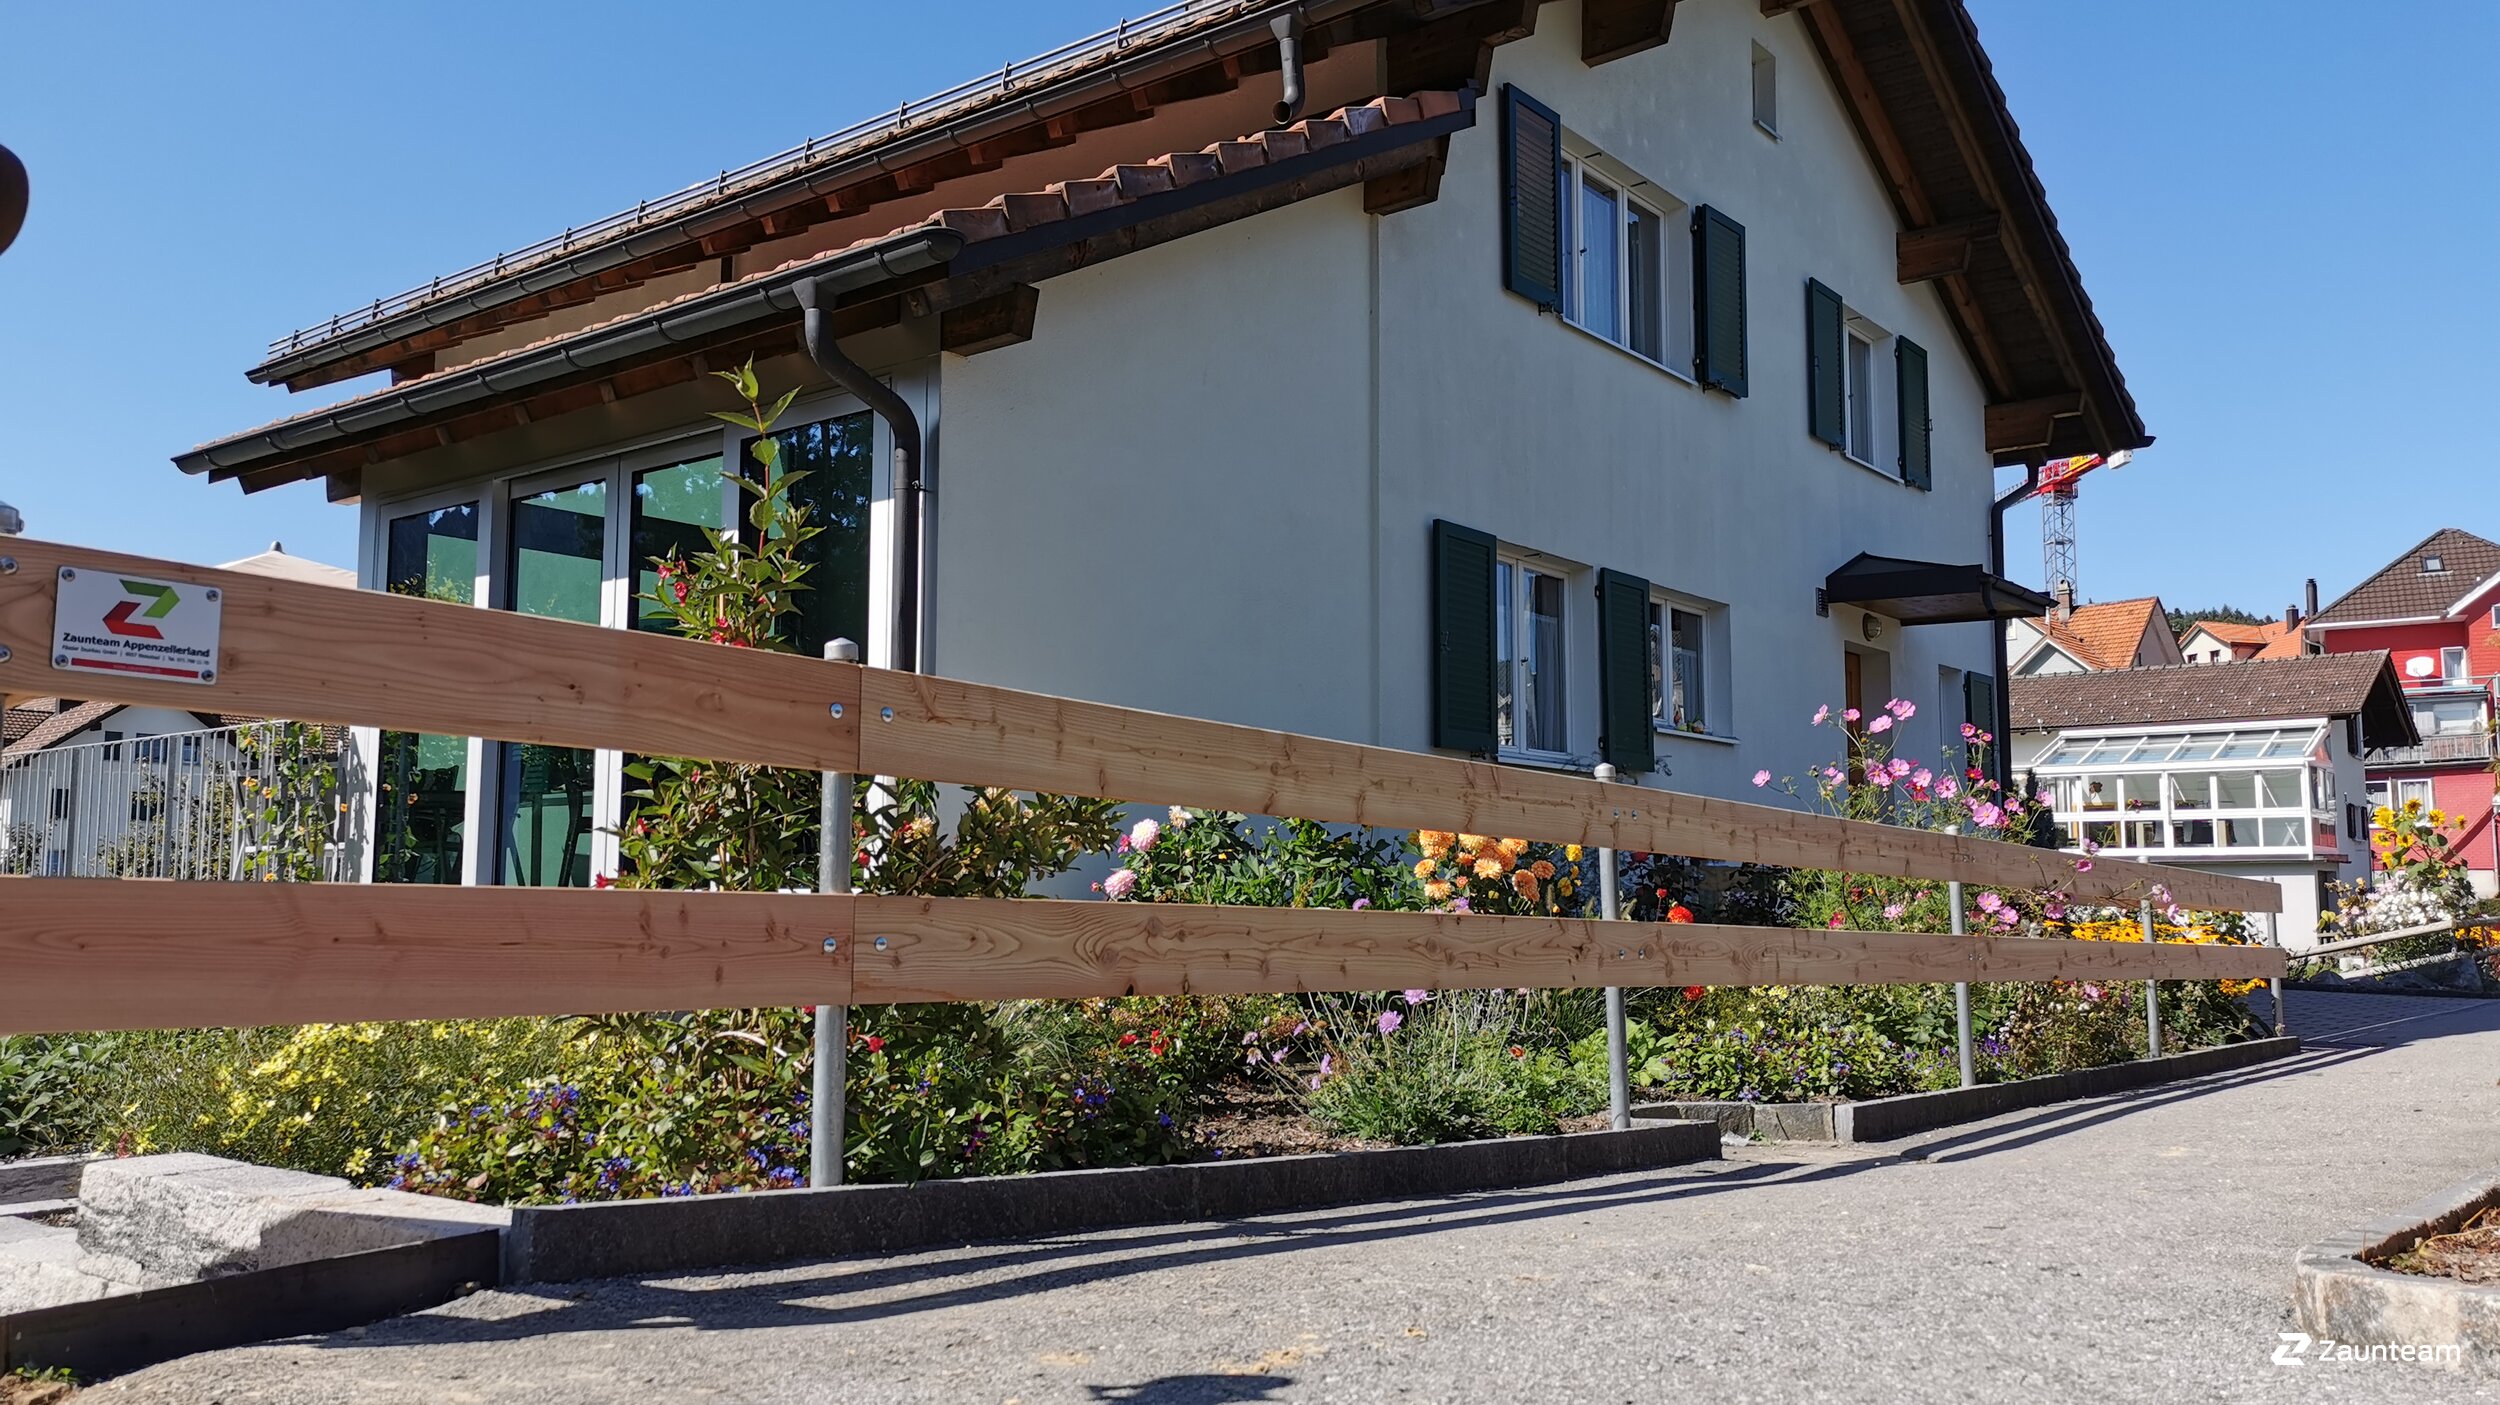 Clôture ranch de 2019 à 9413 Oberegg Suisse de Zaunteam Appenzellerland.